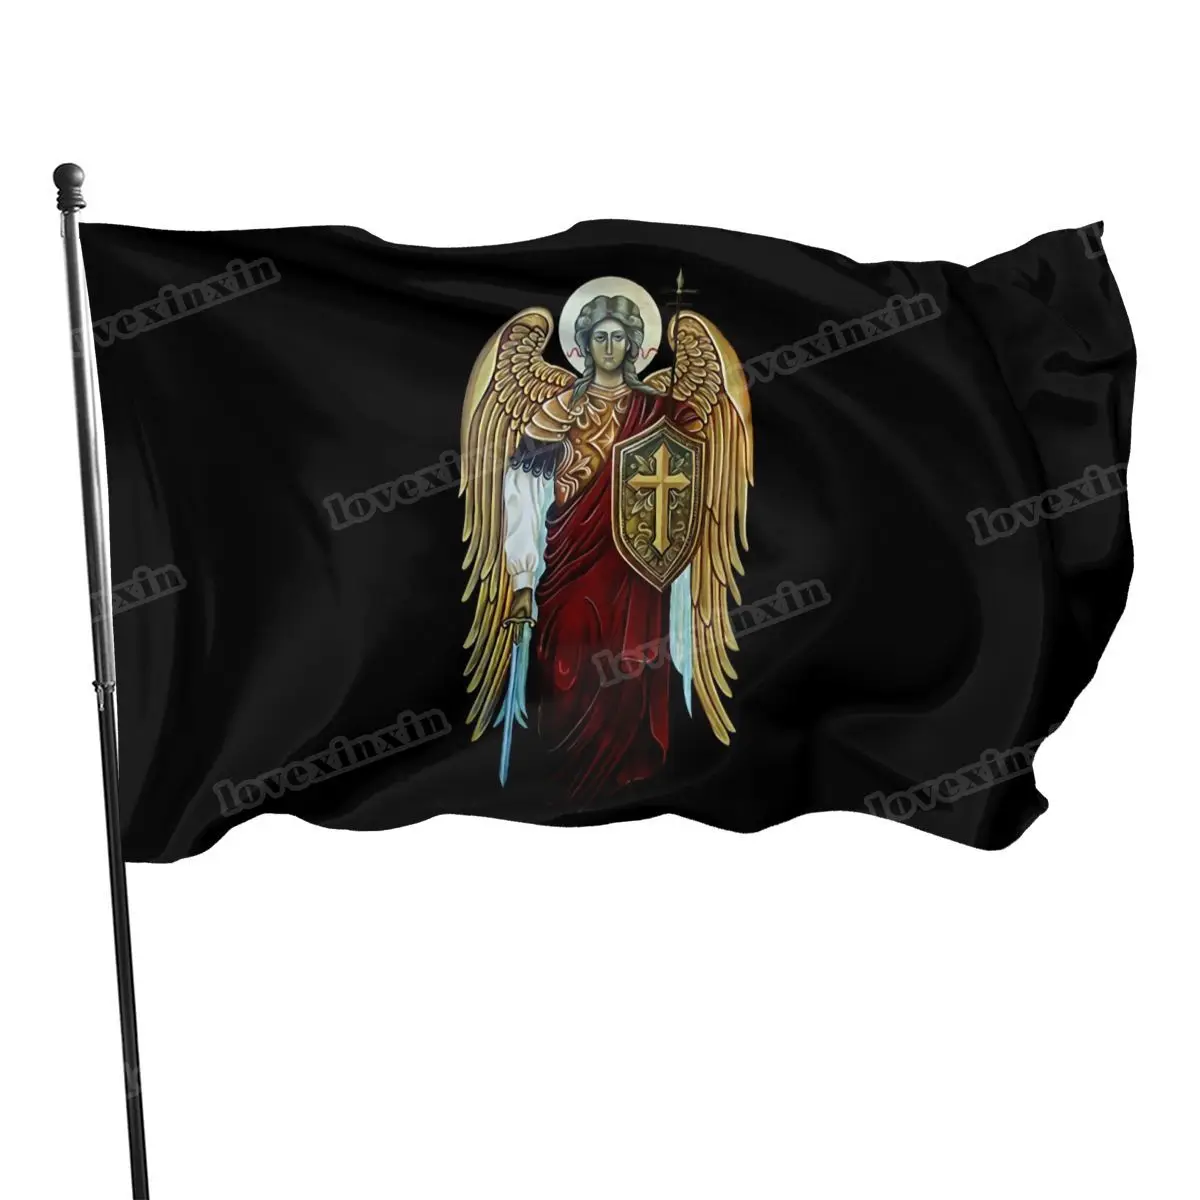 Saint Michael The Archangel Knight of God Catholic Christian Black New Holiday New Brand Novelty Man Flag